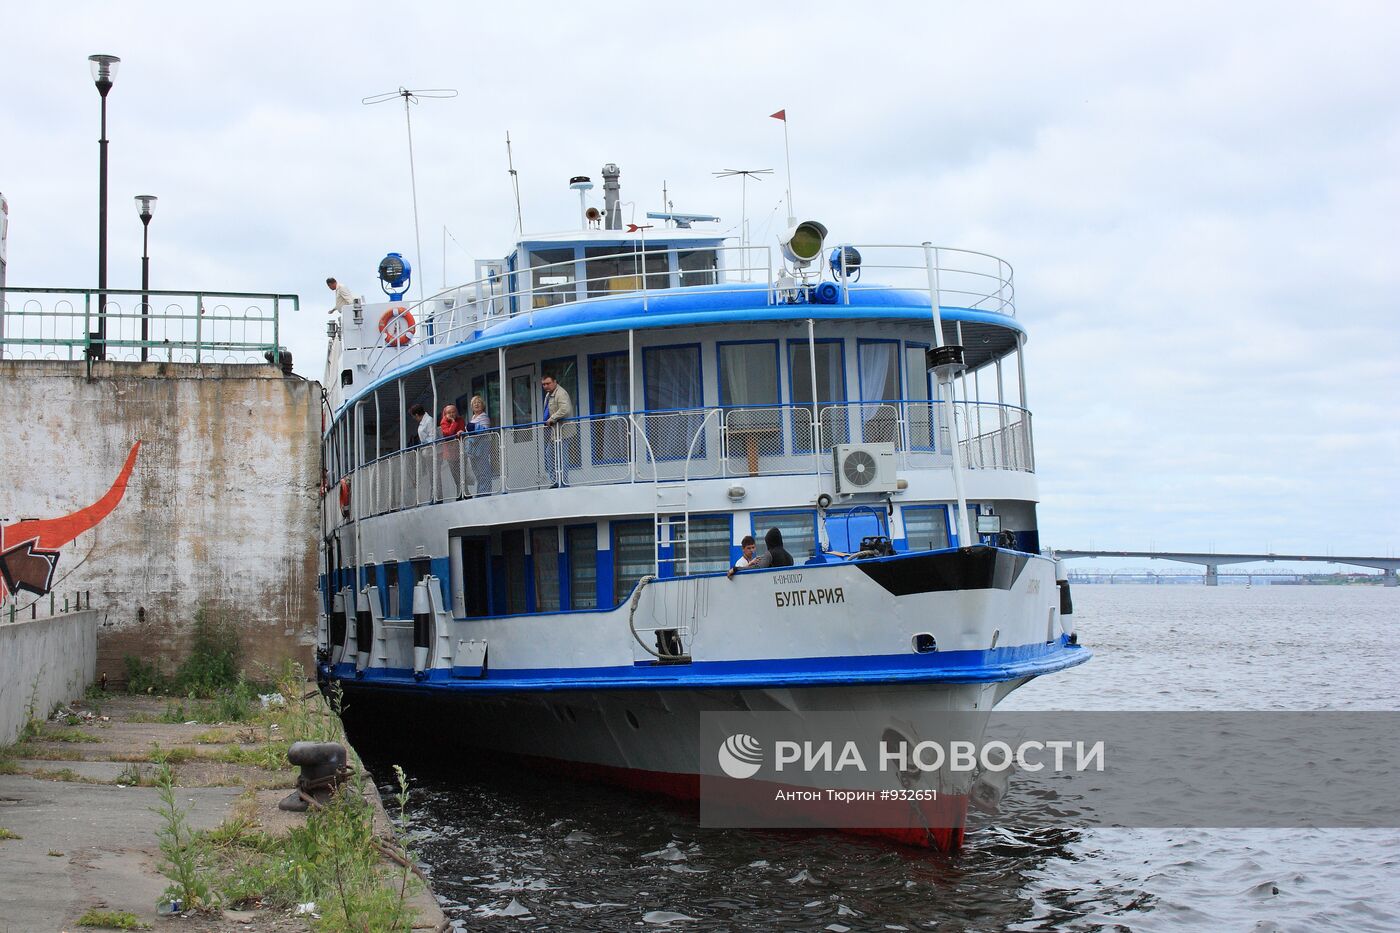 Теплоход "Булгария" в порту Перми